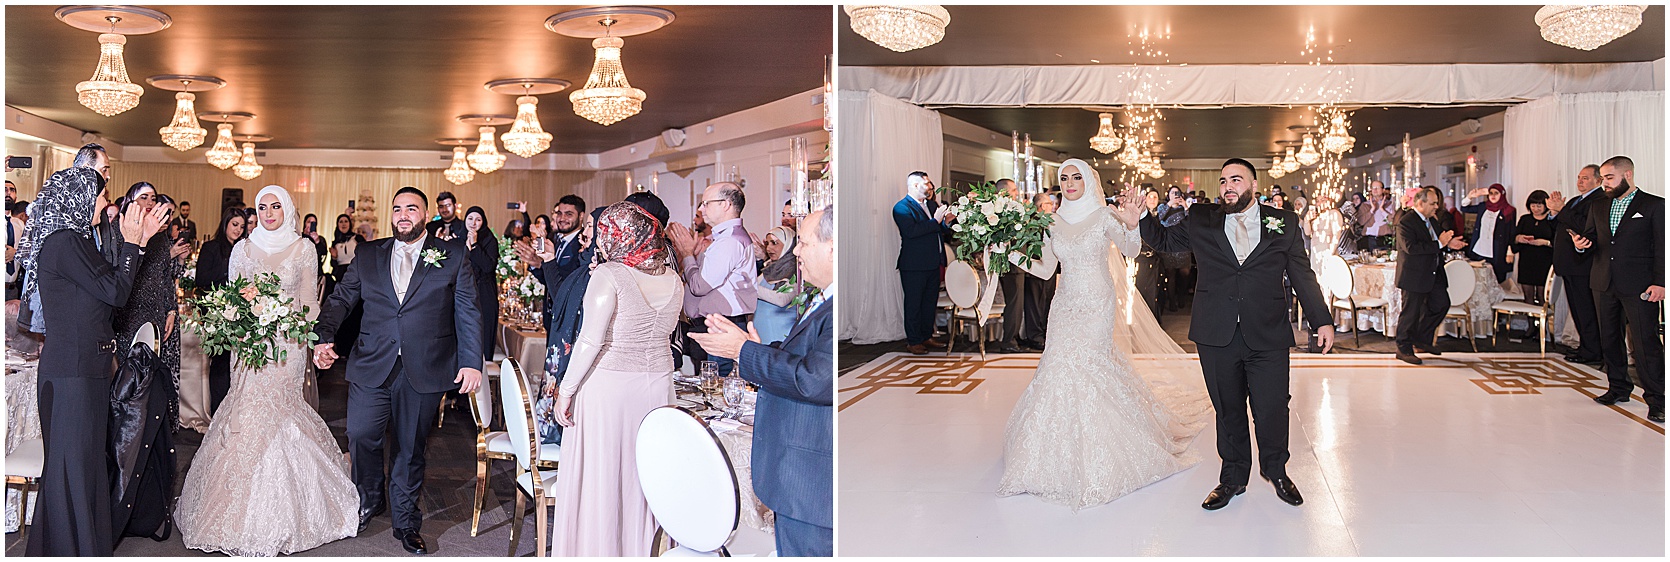 0669_Mohamed_and_Fatima_Orchard_View___Luxury_Wedding_PhotosbyEmmaH_WEB.jpg